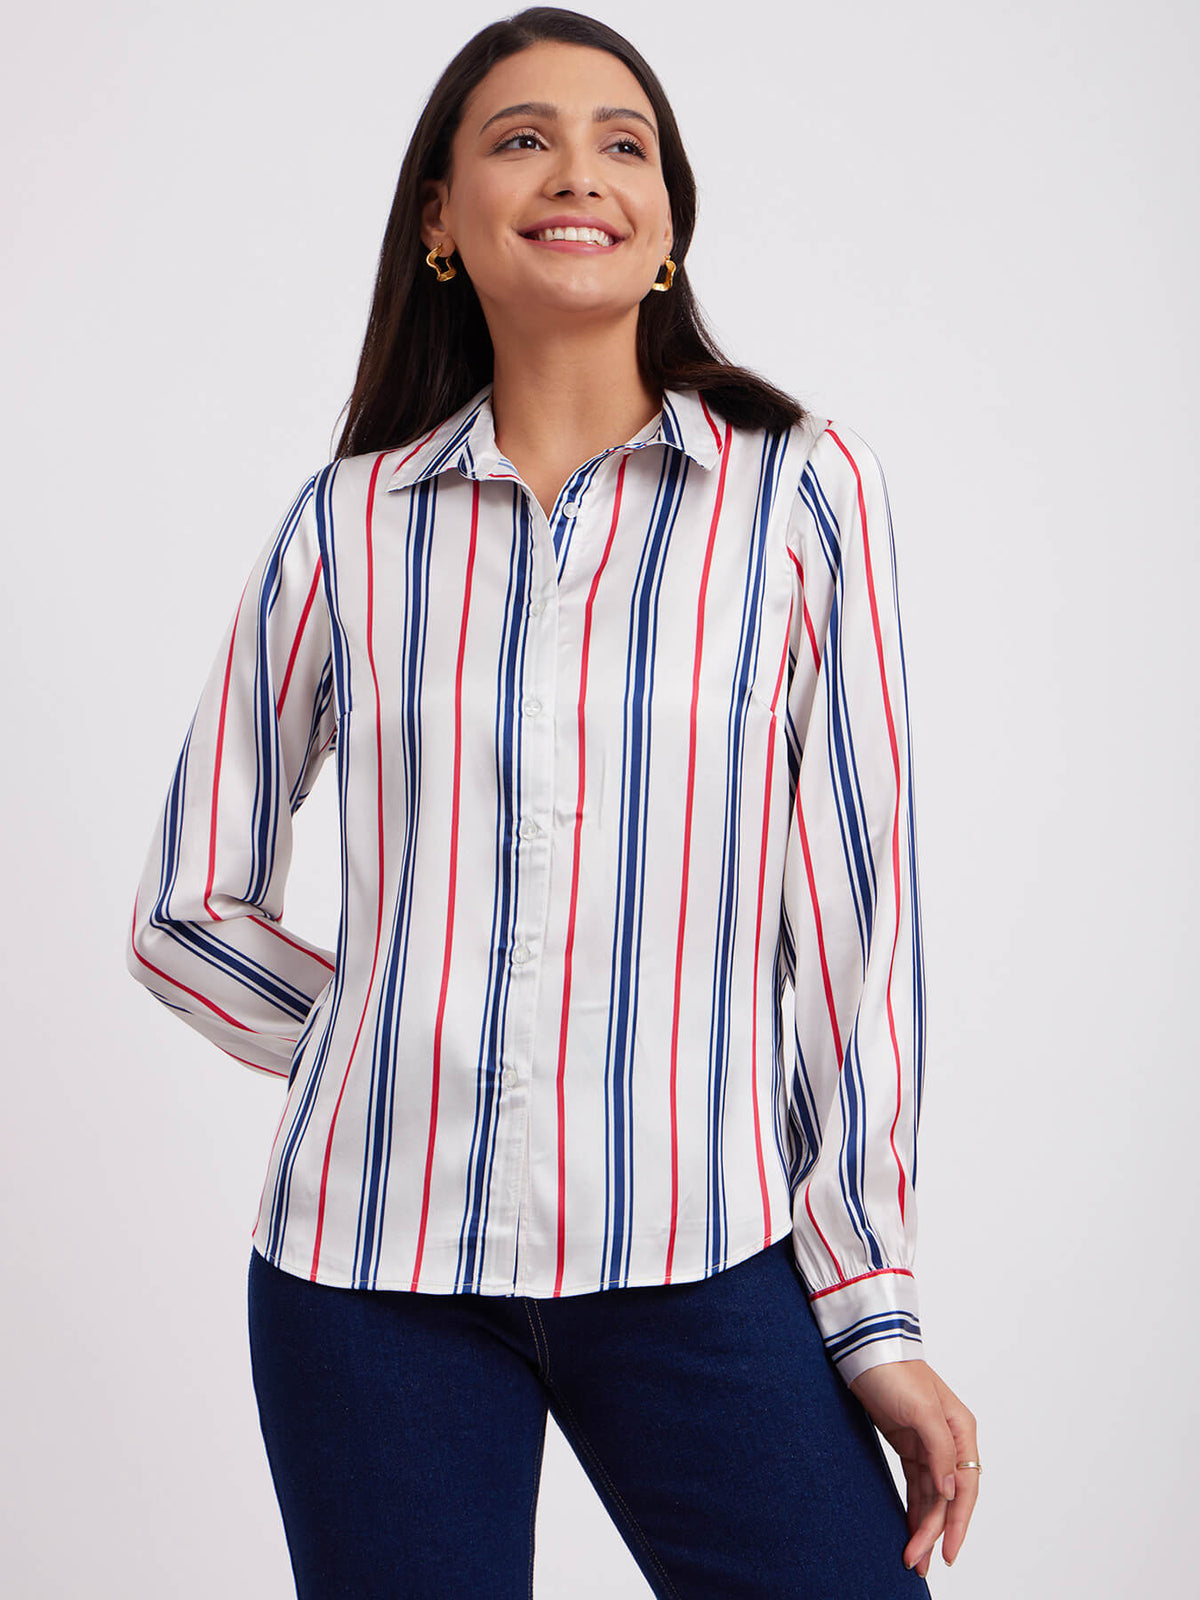 Satin Stripes Print Shirt - Multicolour